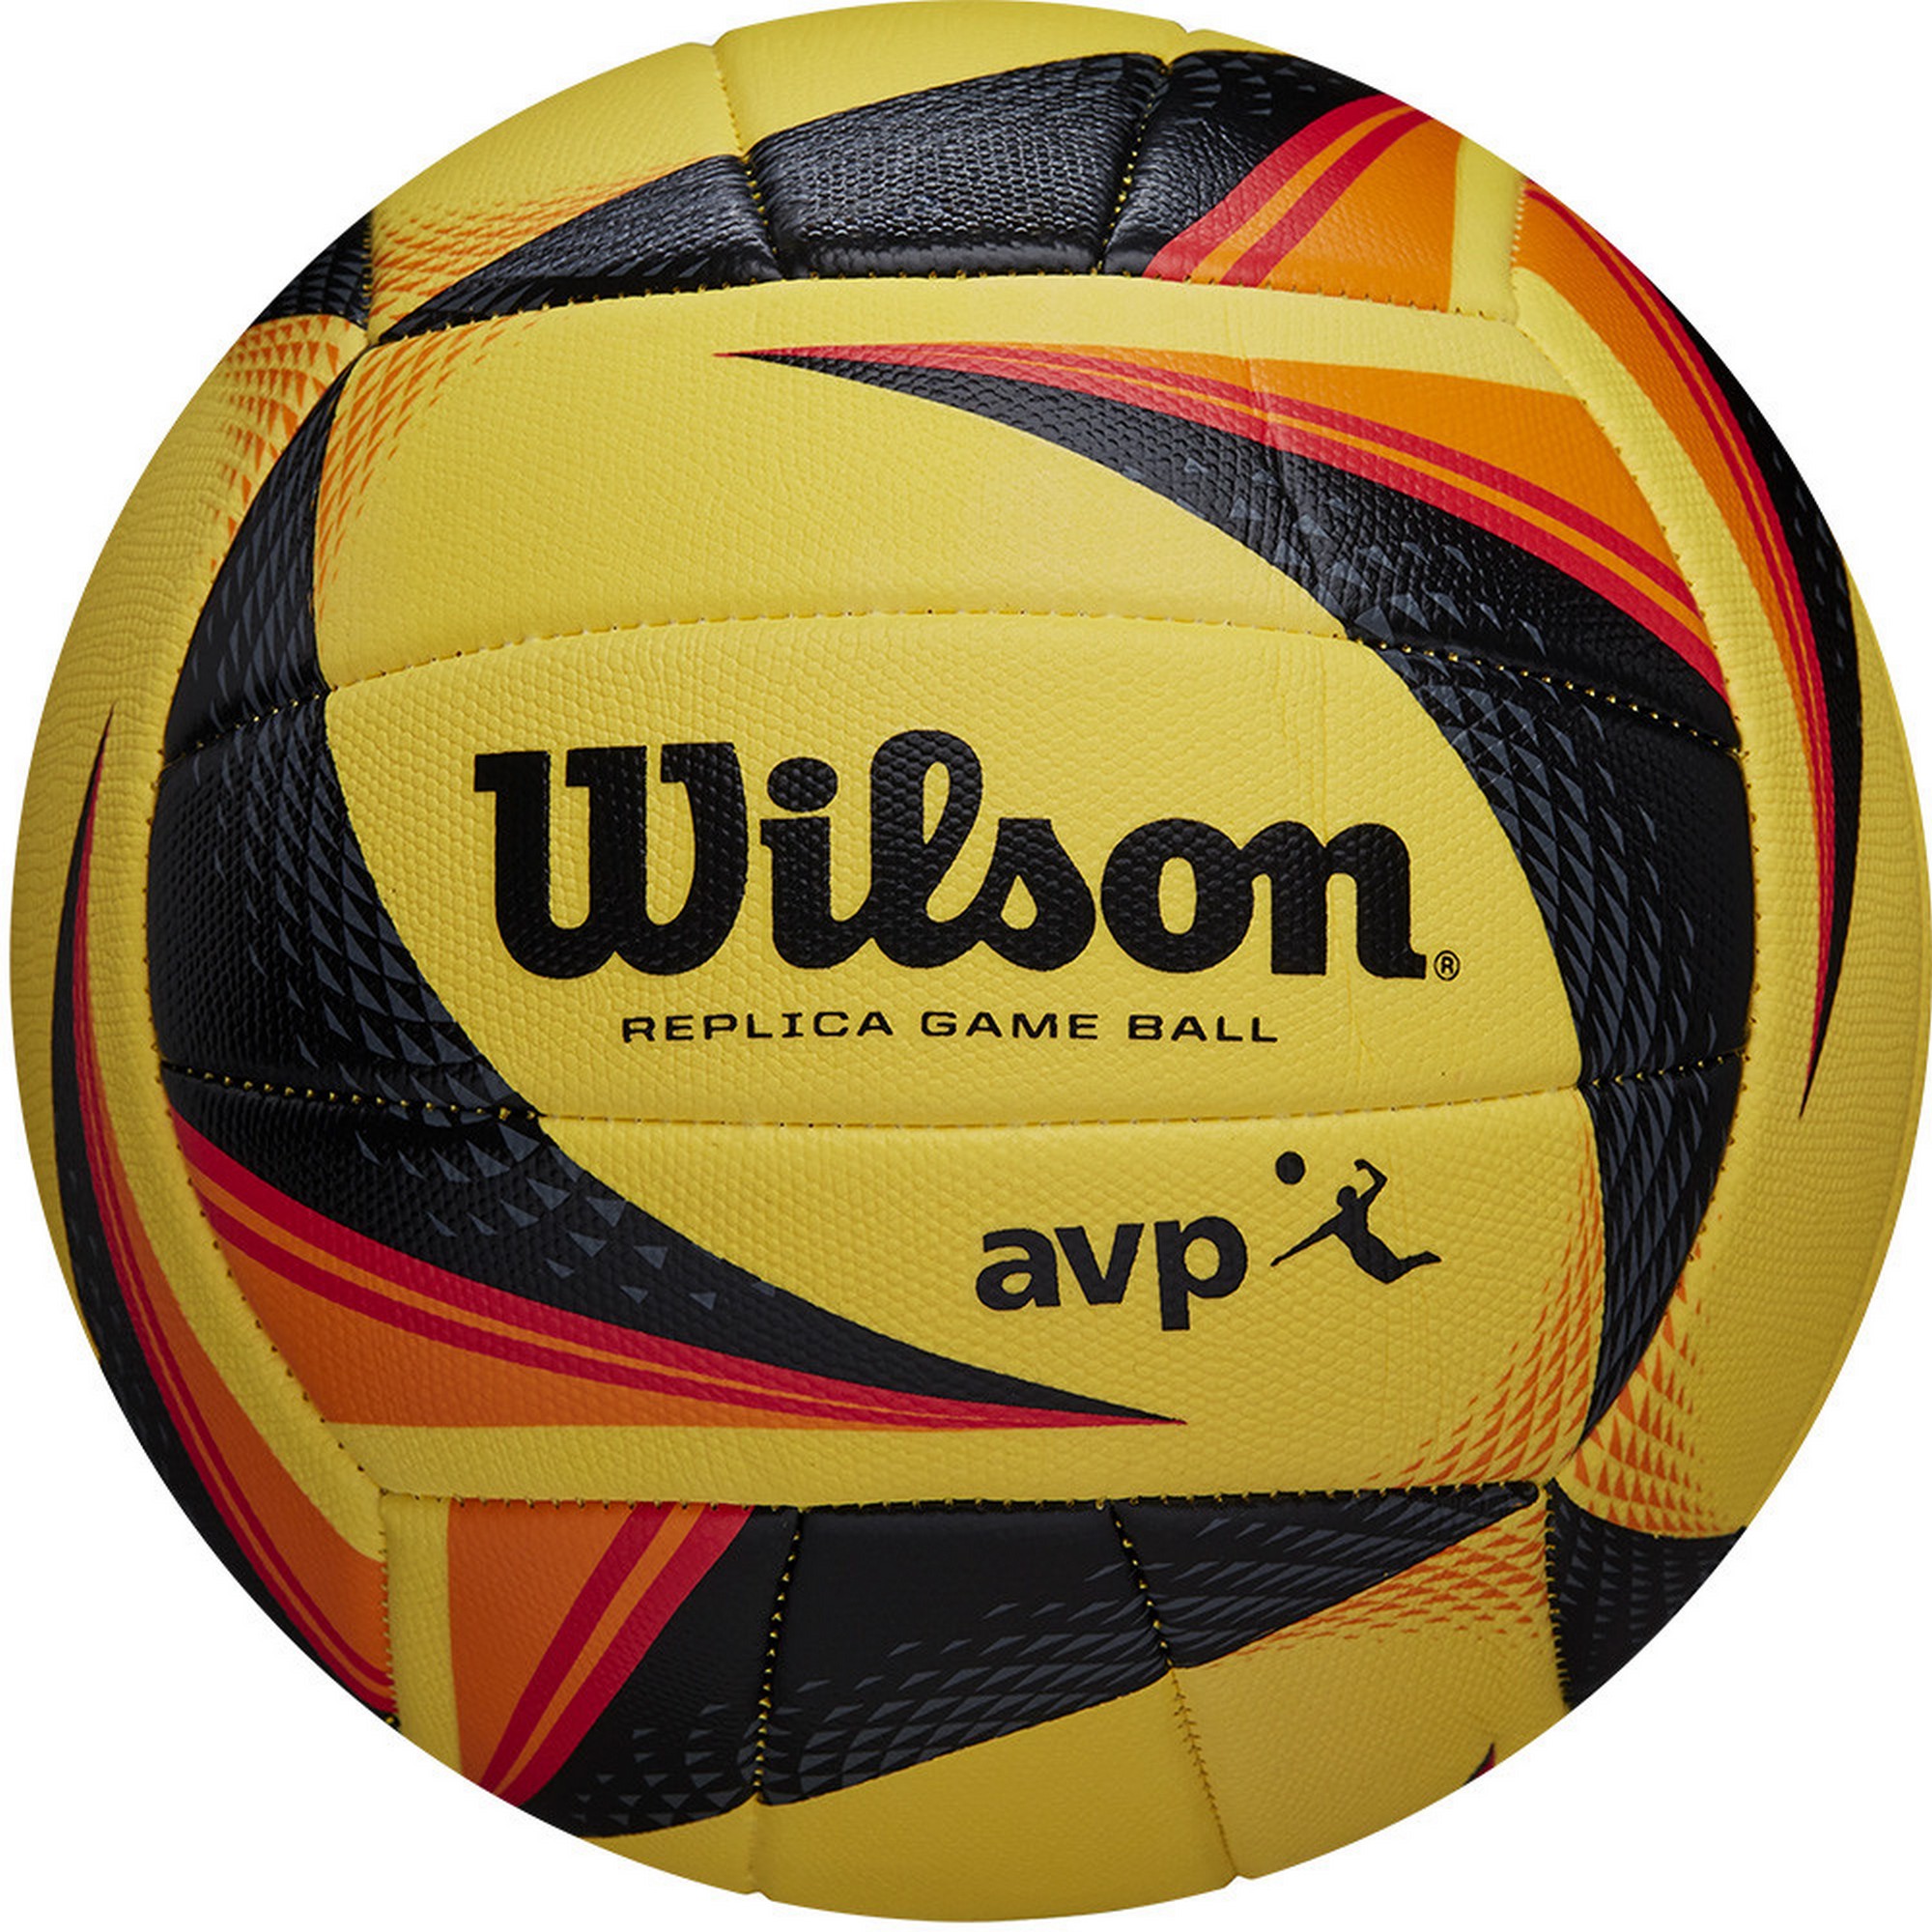   Wilson OPTX AVP VB REPLICA WTH01020X .5